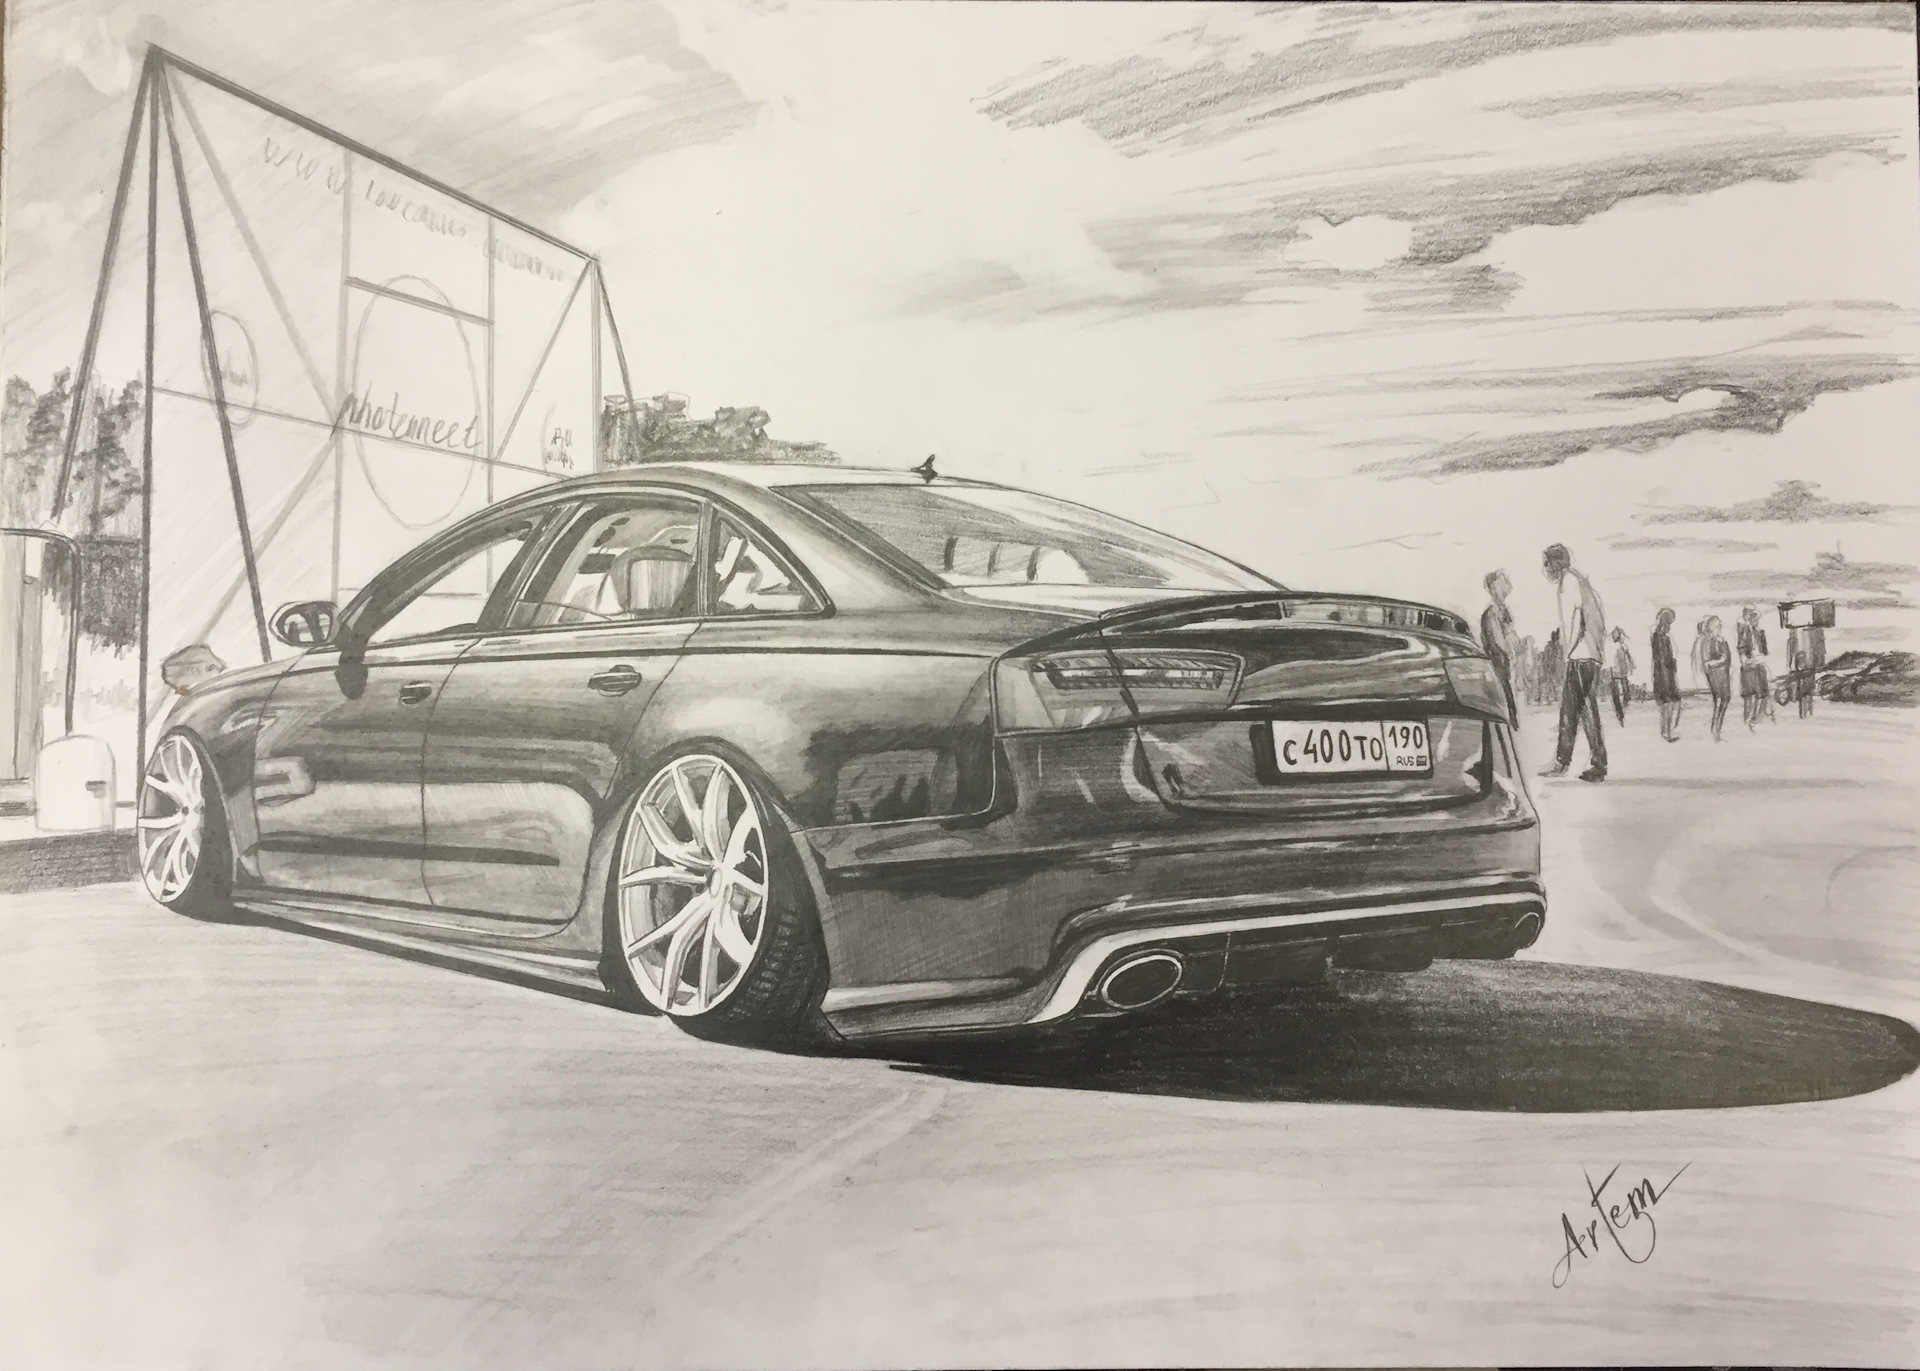 Картинка а 4 нарисована. Audi a6 с4 карандаш. Audi a4 Crayon. Ауди а6 карандашом. Ауди рс6 рисунок карандашом.